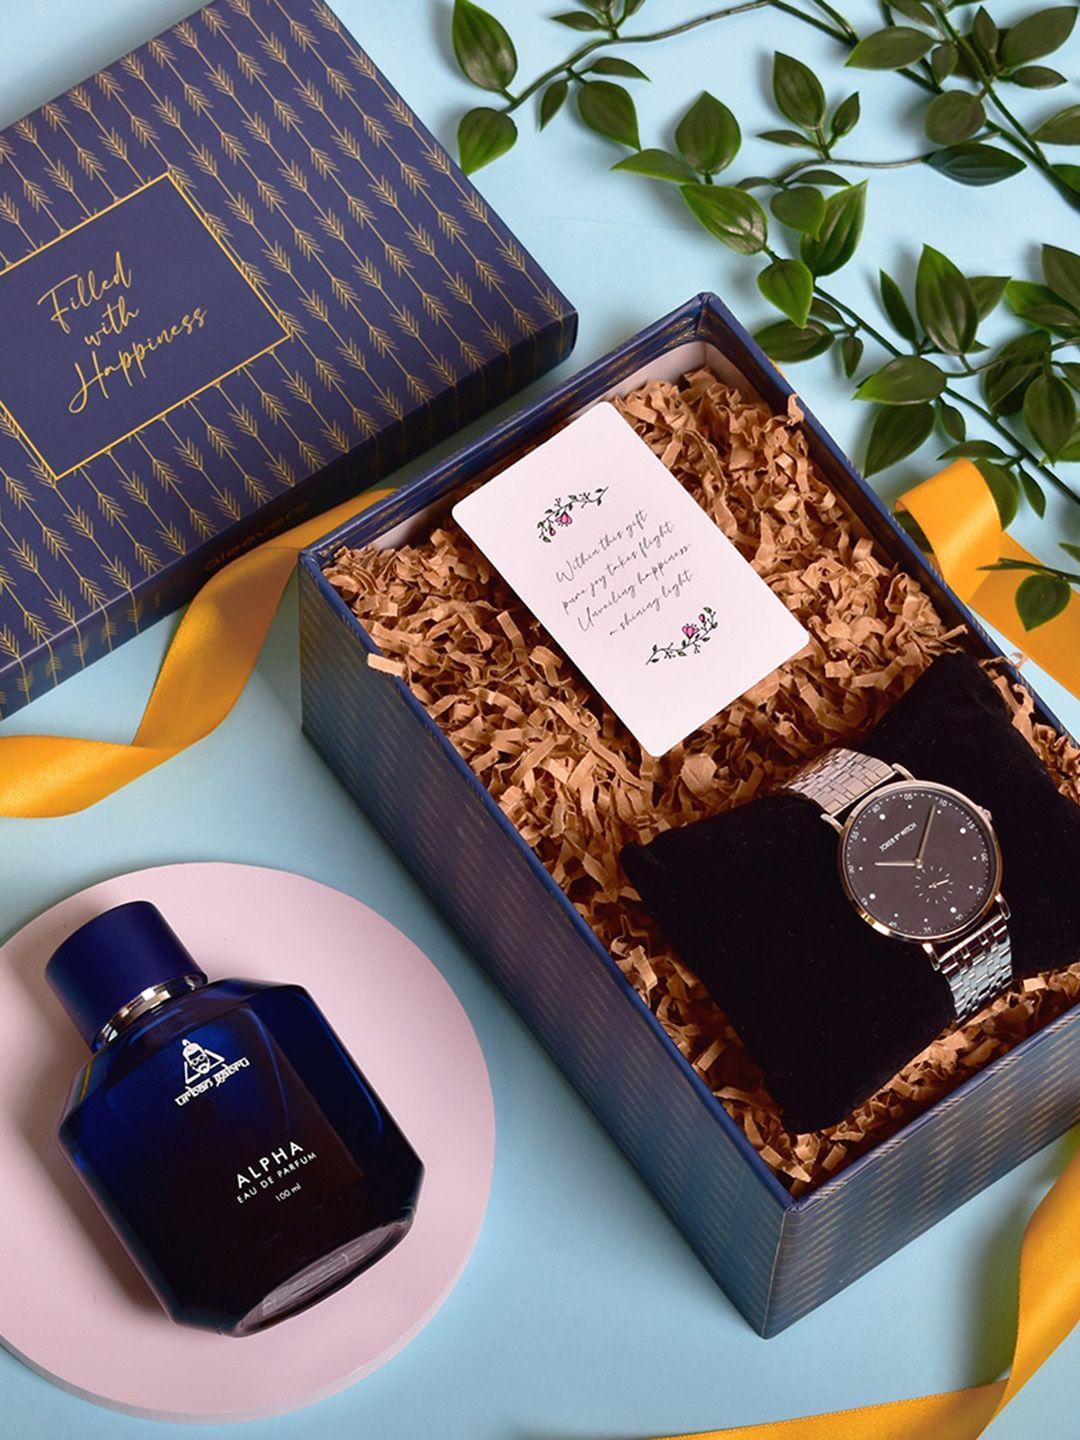 gleevers set of 2 urban gabru alpha eau de parfum - 100ml with classic watch gift set